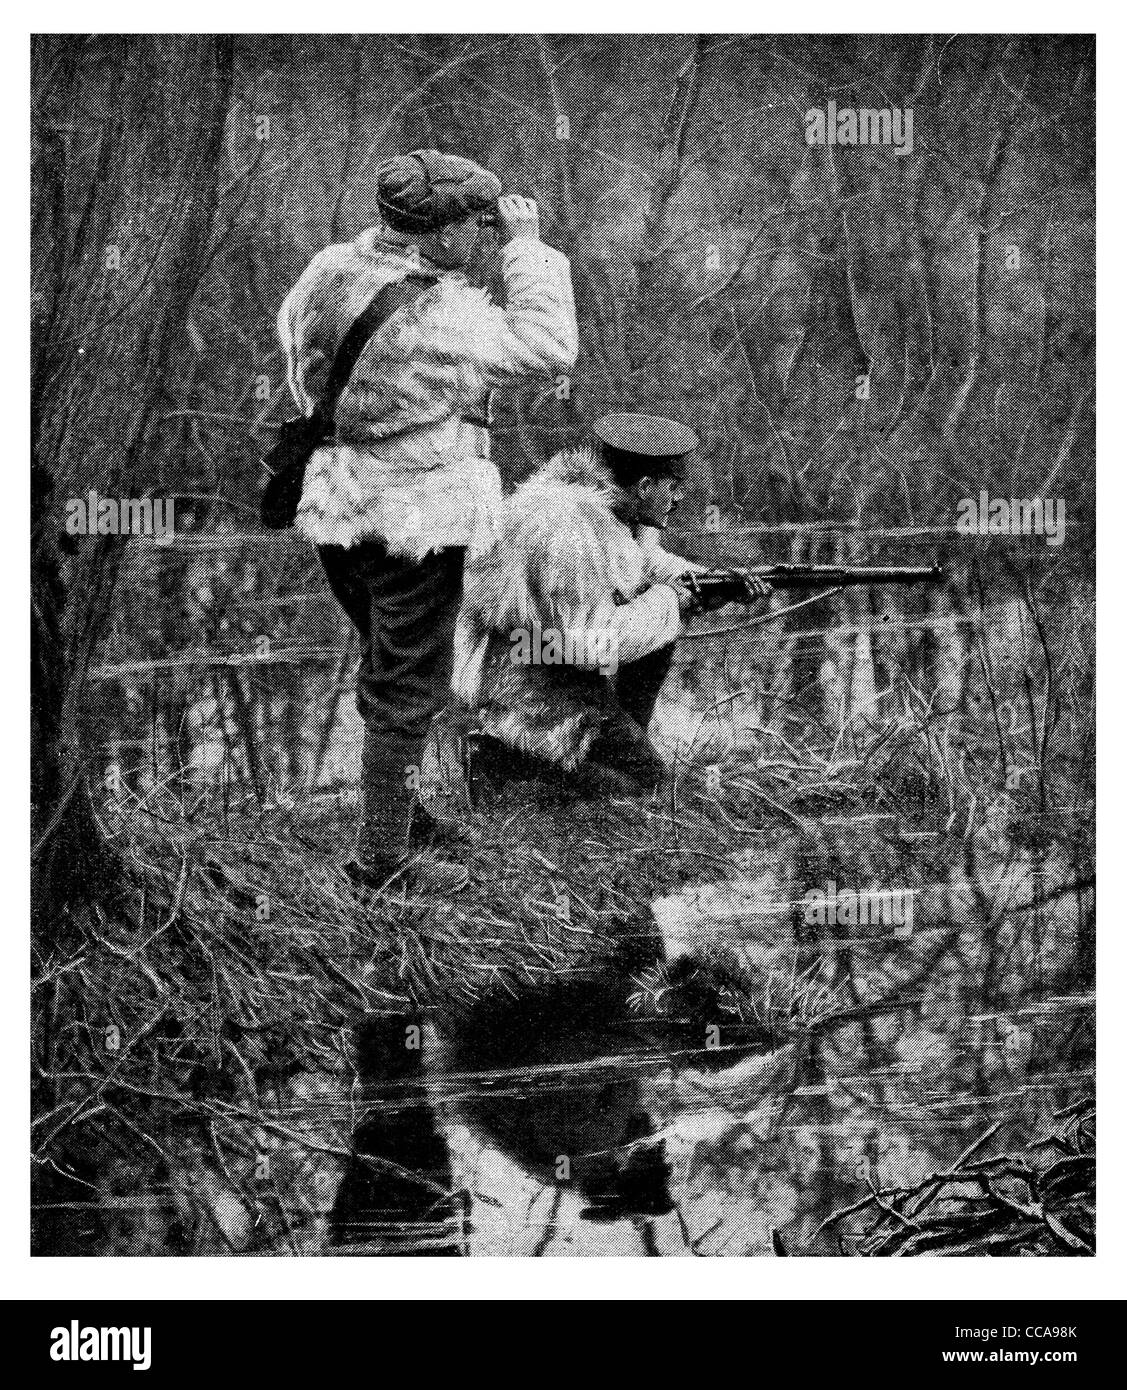 1915 winter fur coat British soldier in France Rifle forest gorilla tactics binoculars bush hedge camouflage special uniform Stock Photo